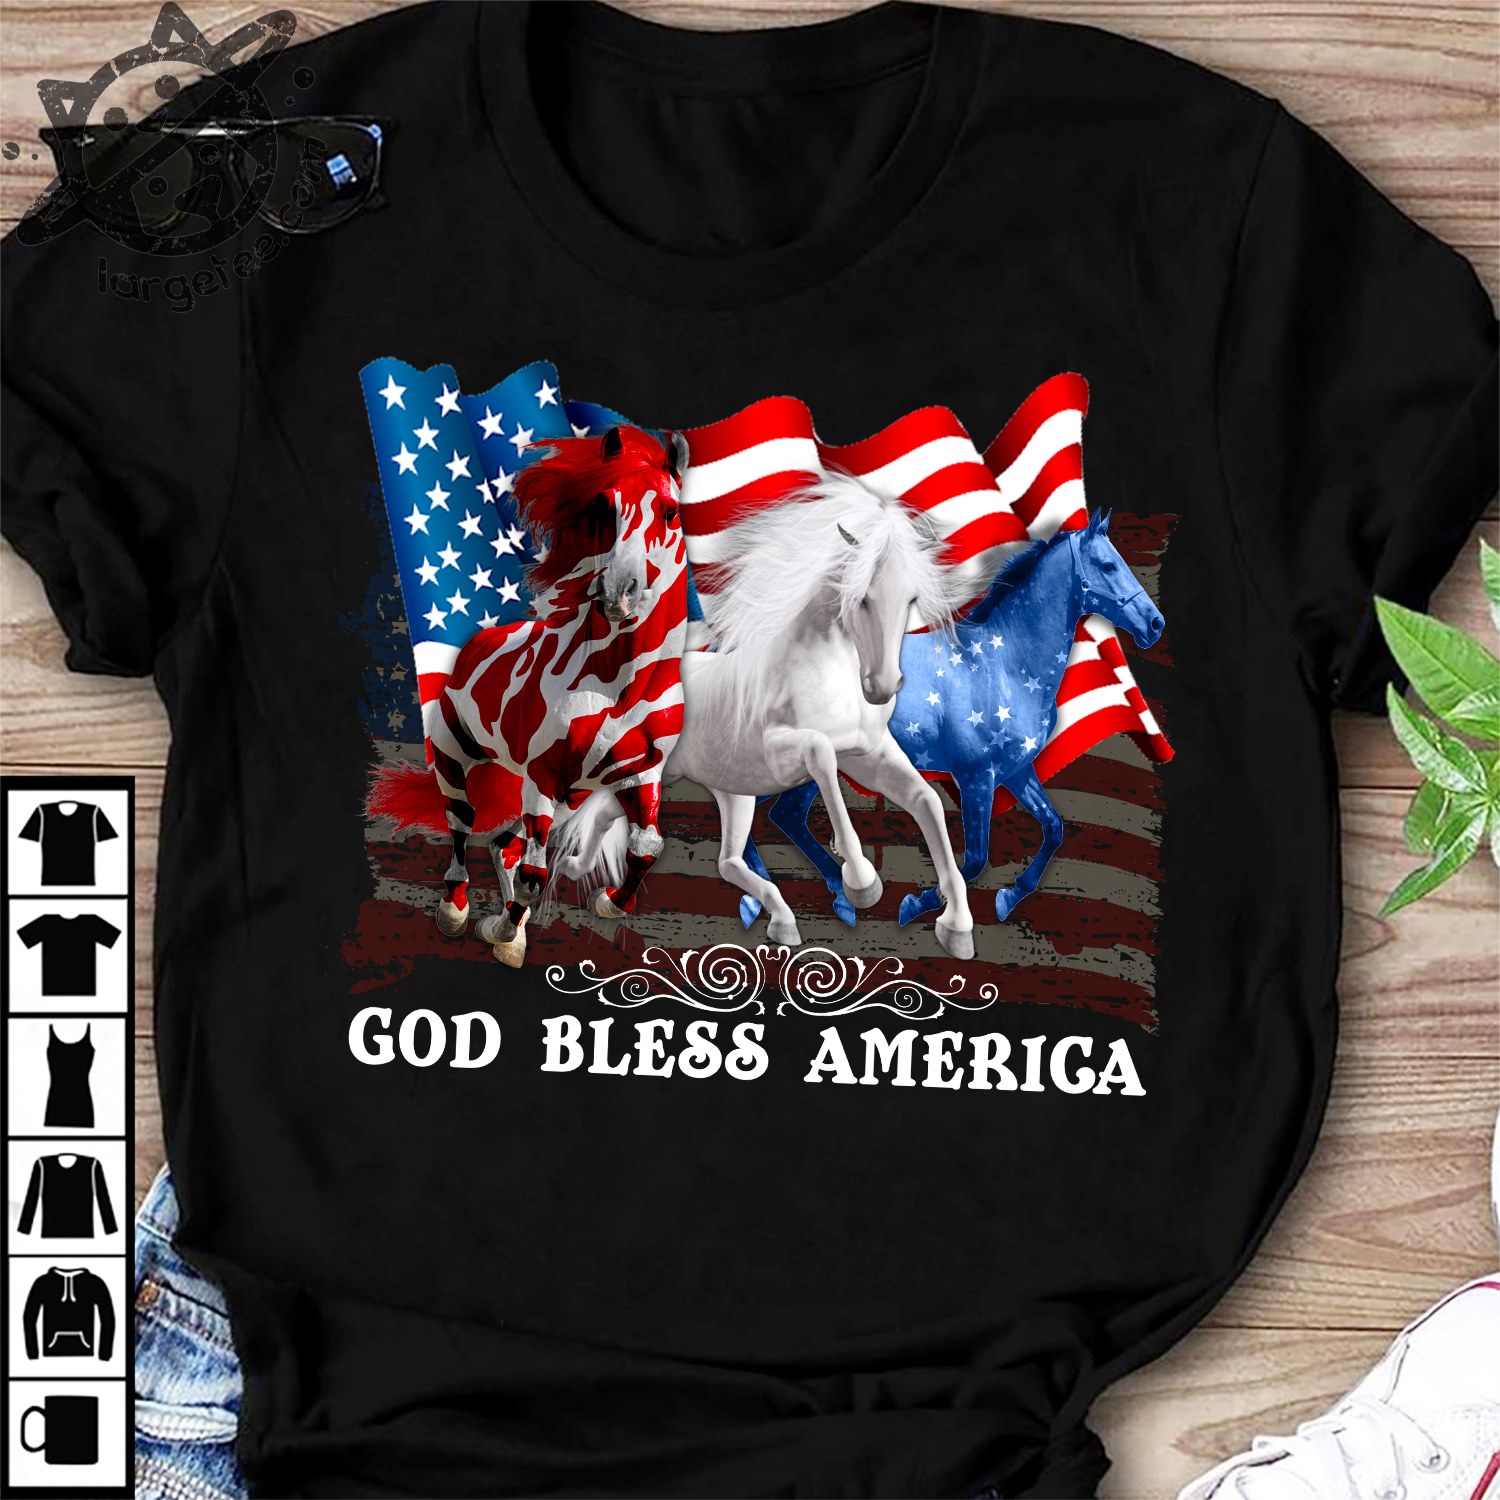 God bless America - Horse and America flag